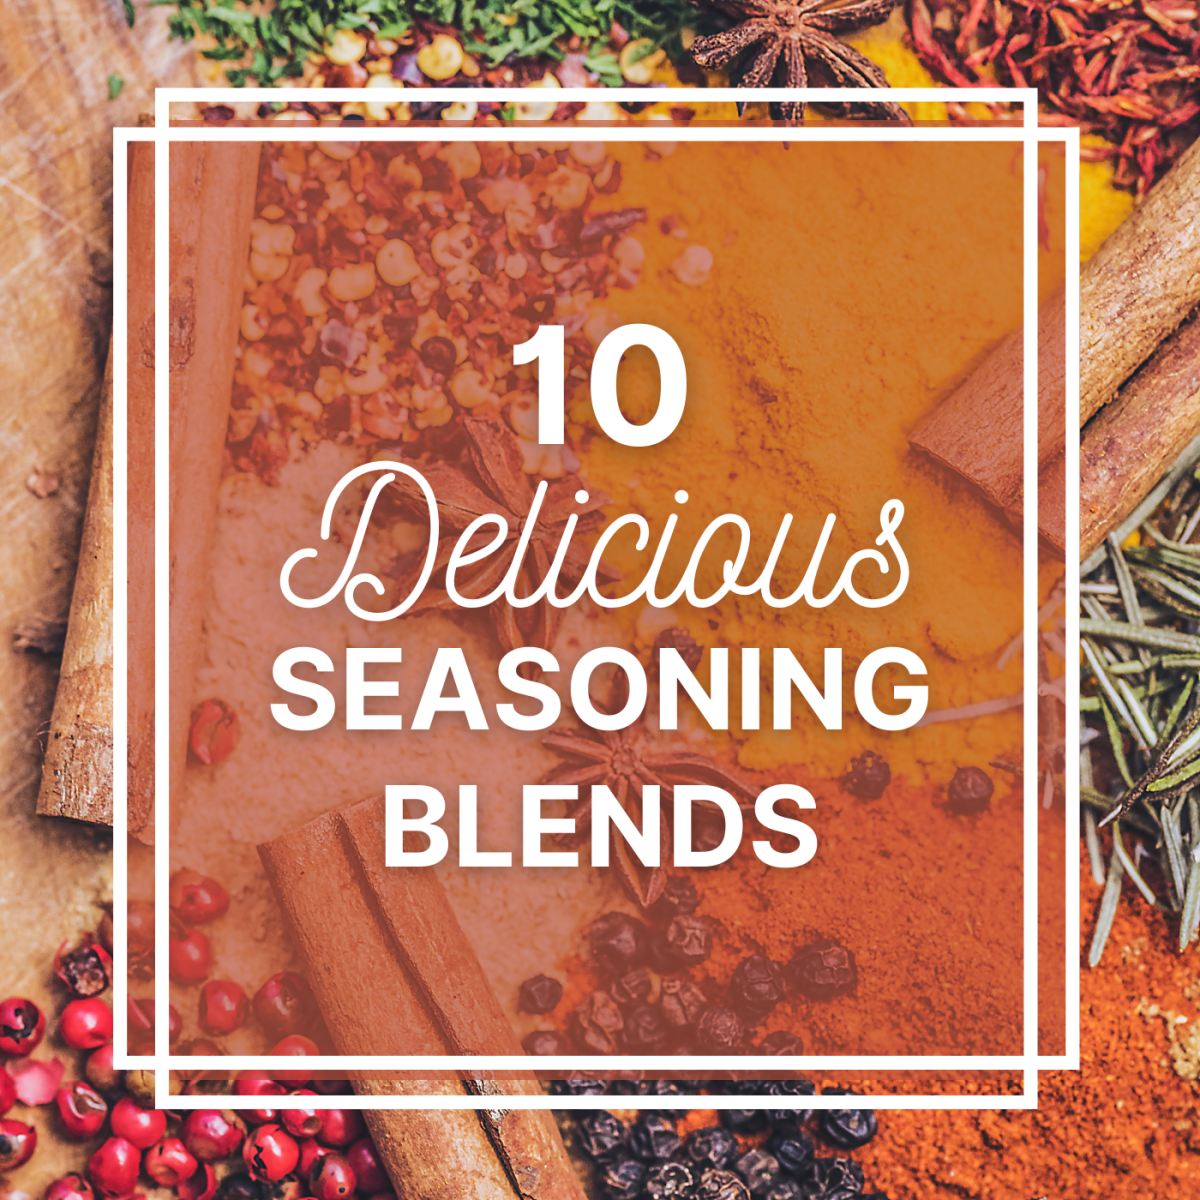 Ten seasoning blend recipes you can make at home